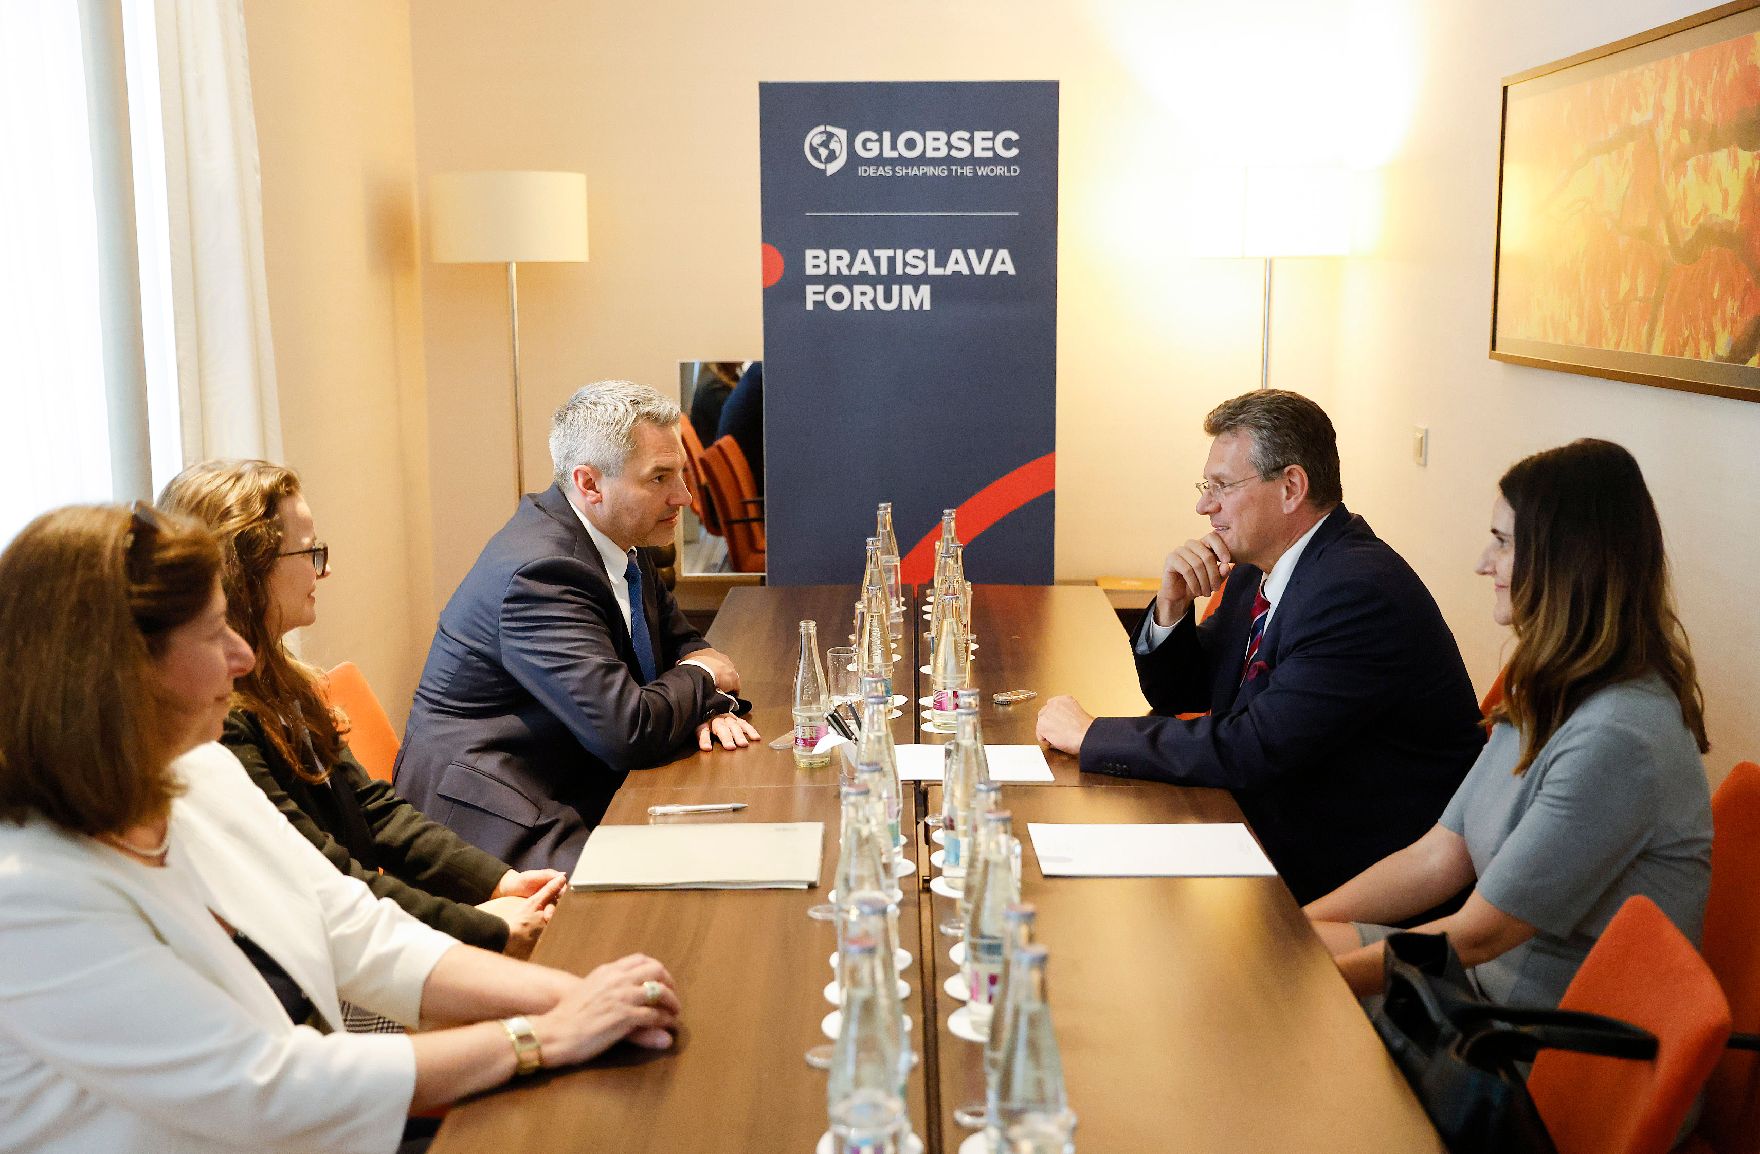 Am 3. Mai 2022 reiste Bundeskanzler Karl Nehammer (2.v.l.) zum GLOBSEC2022 Forum nach Bratislava. Im Bild mit dem EU-Kommissions Vizepräsident Maros Sefcovic (2.v.r.).